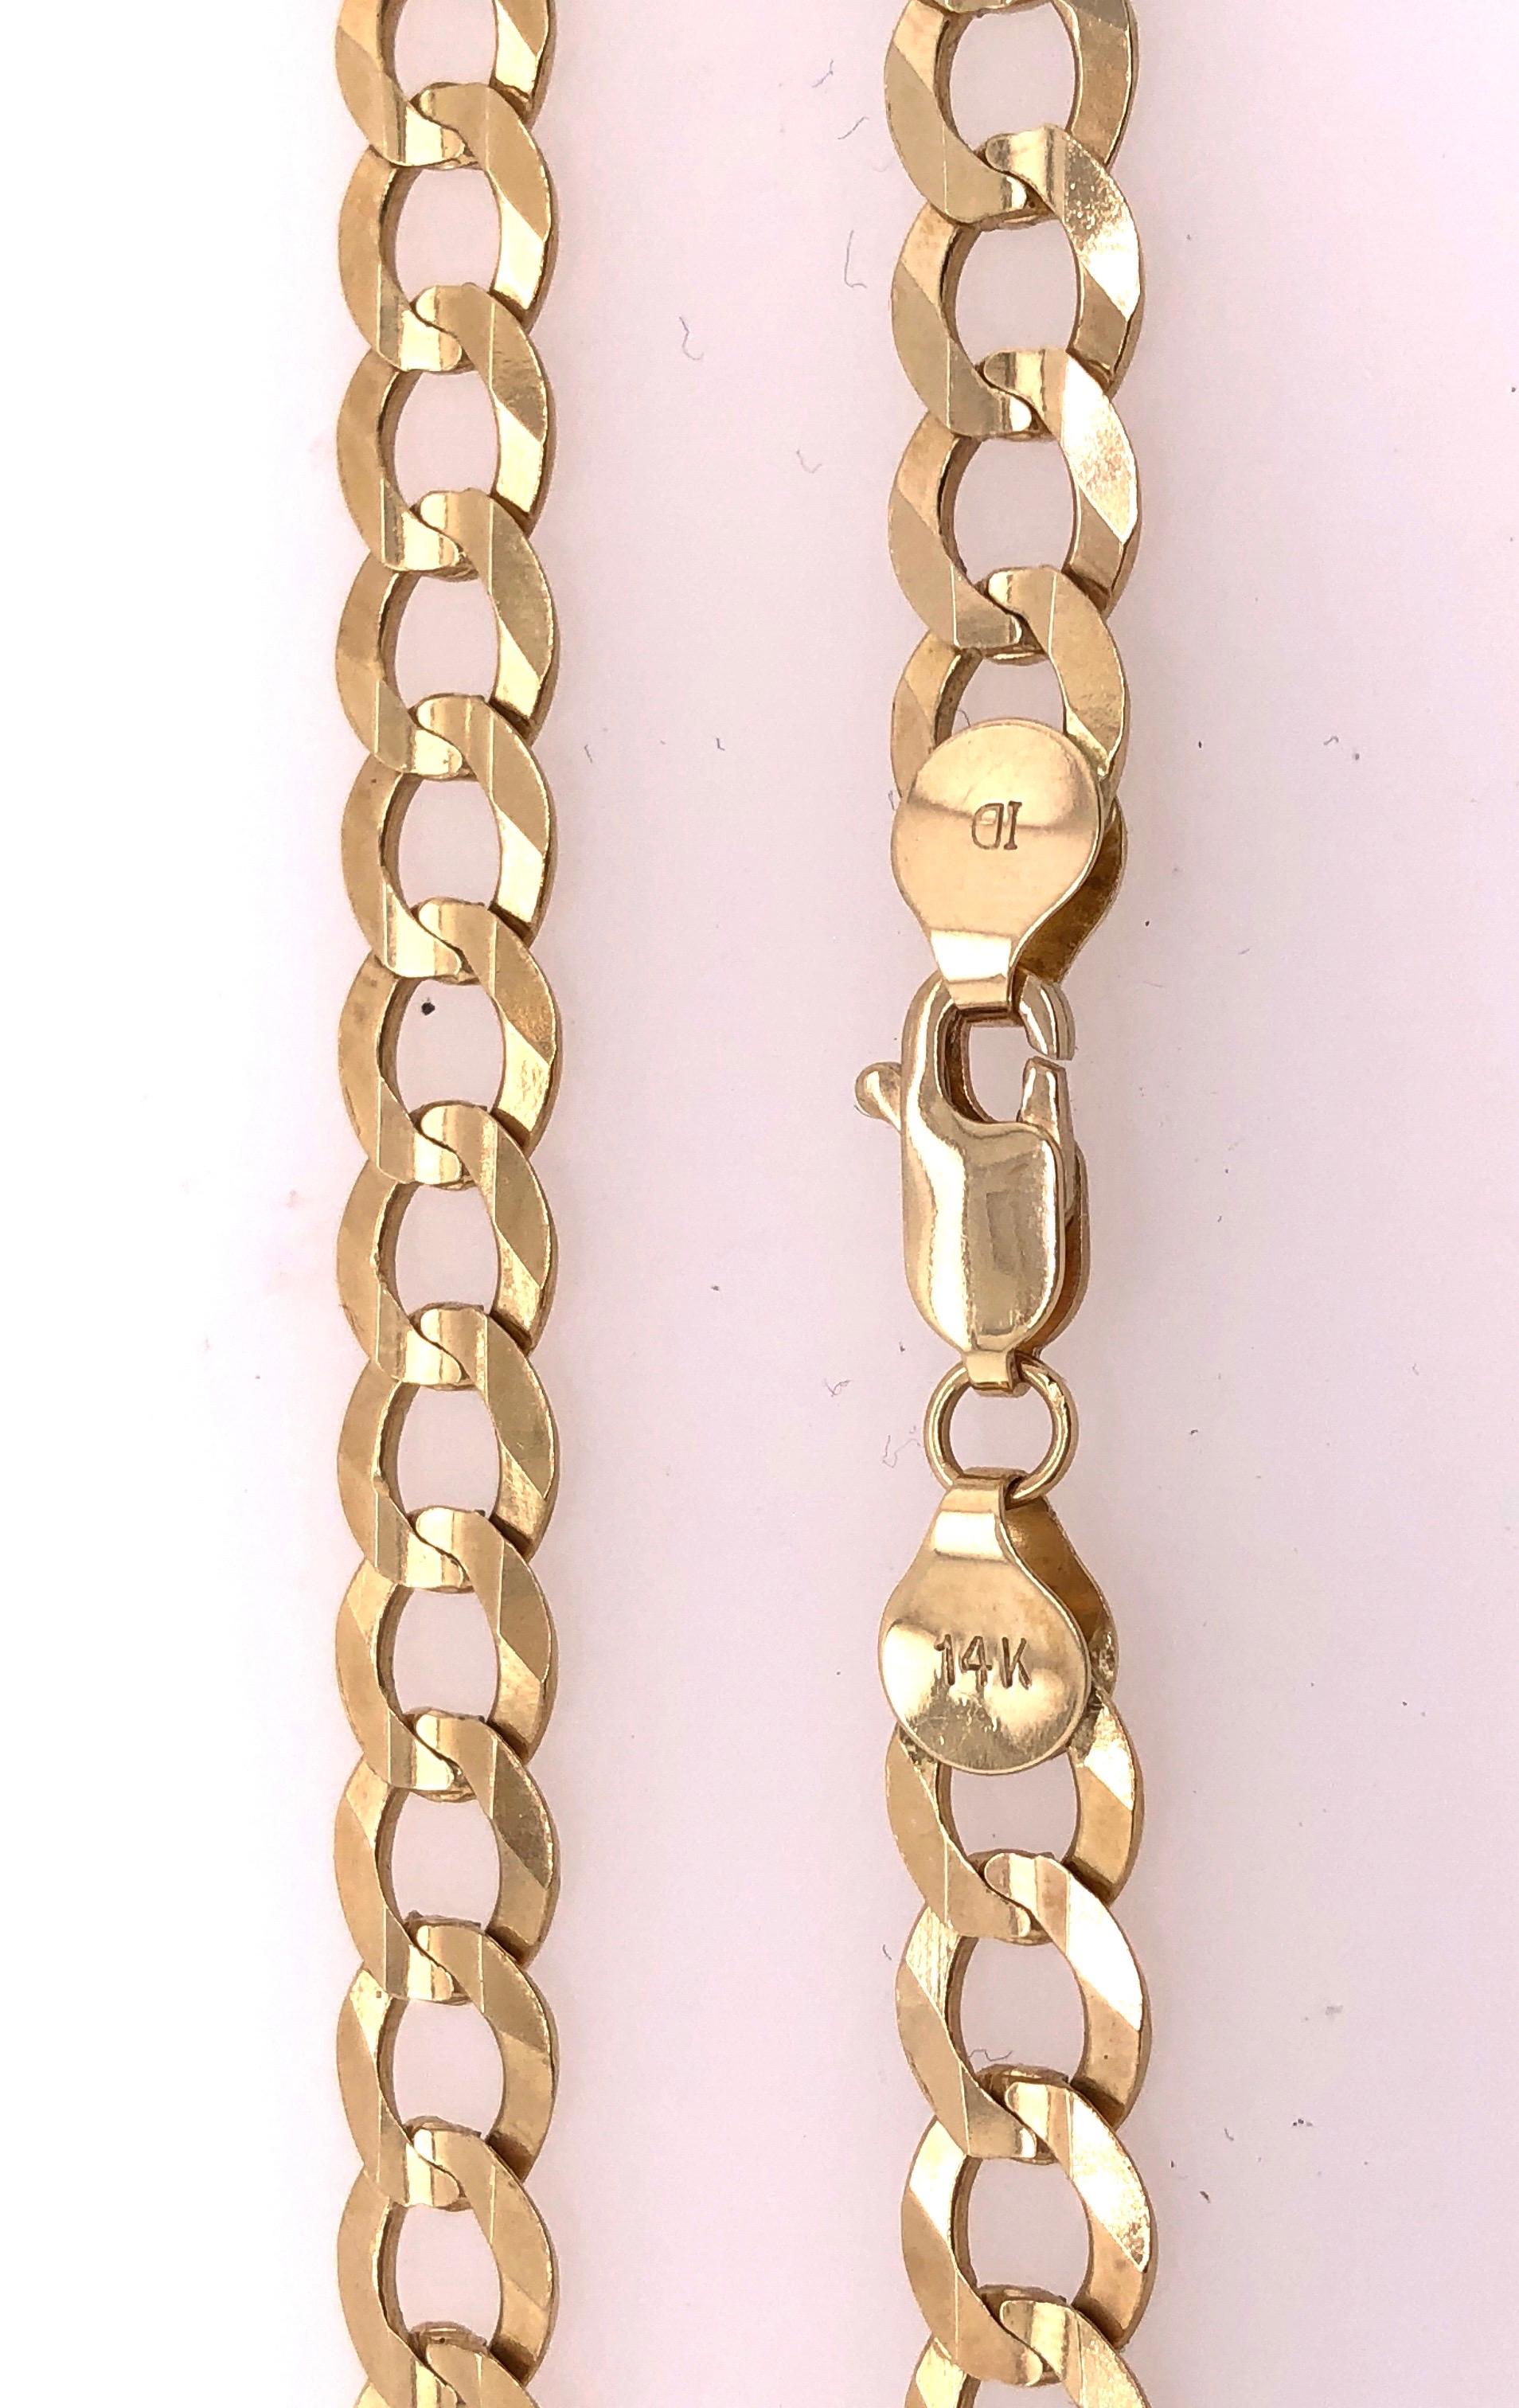 Women's or Men's 14 Karat Yellow Gold Fancy Link Necklace For Sale